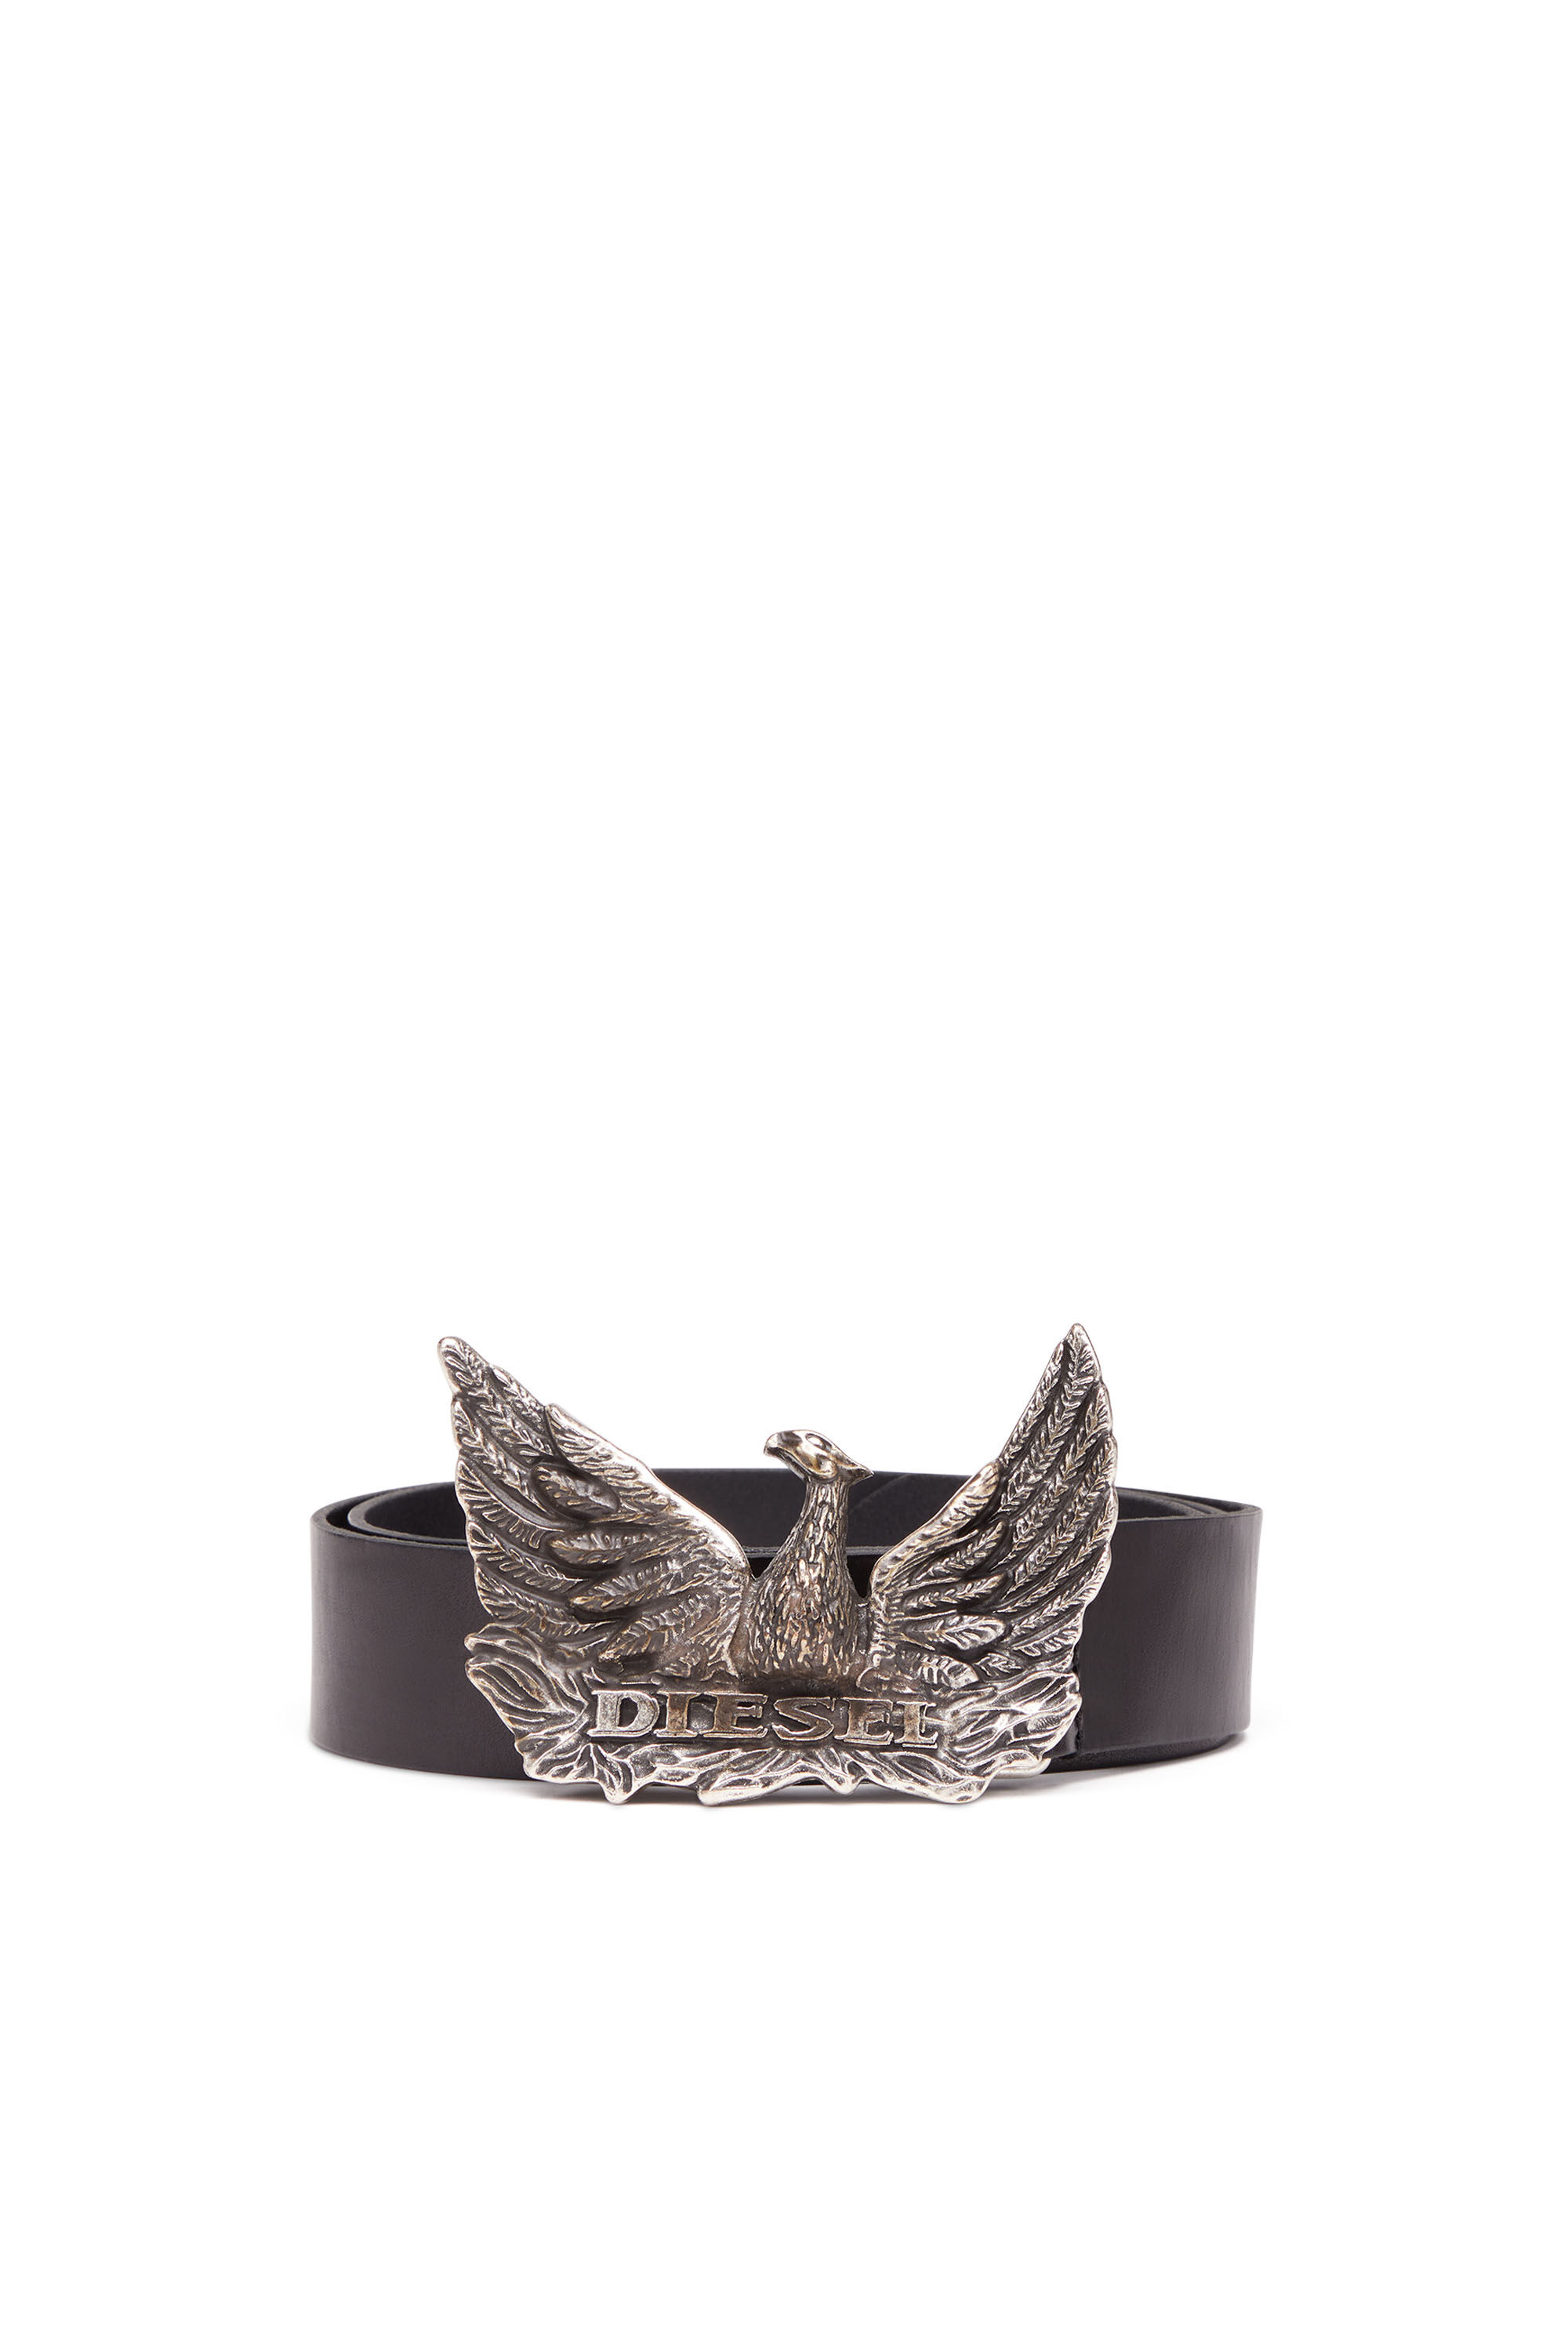 PHOENIX BELT Leather belt with phoenix buckle｜ブラック｜メンズ 